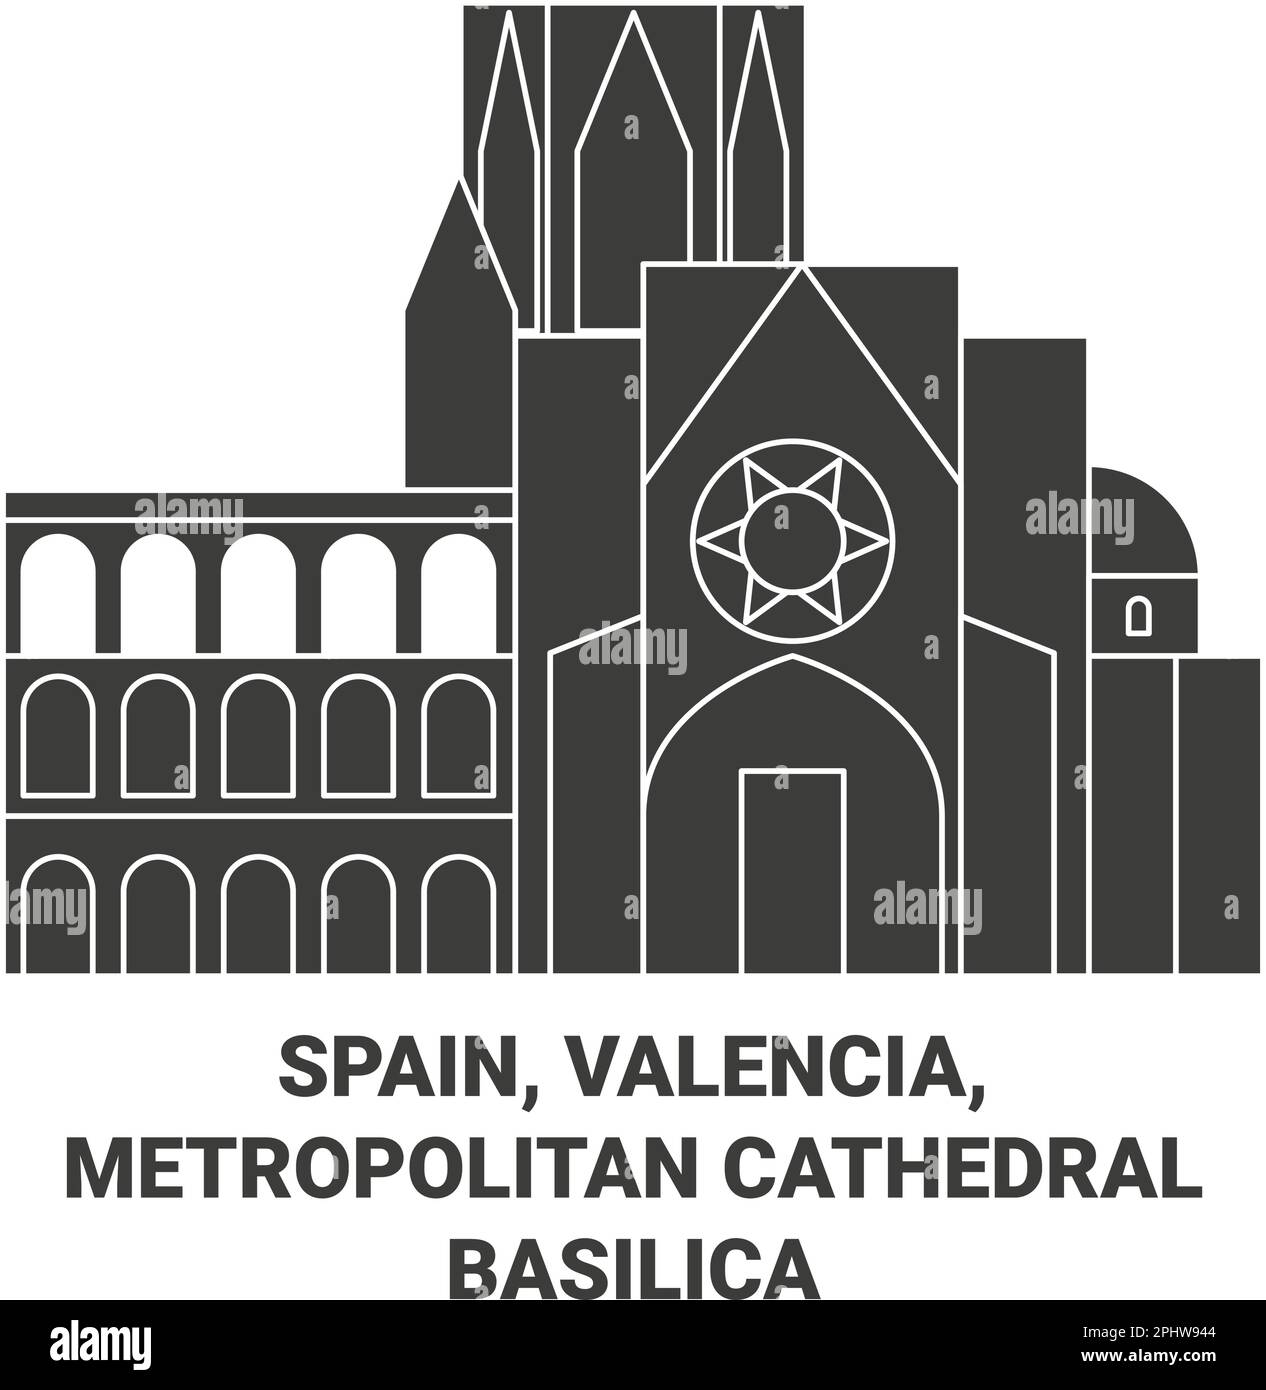 Spanien, Valencia, Metropolitan Cathedralbasilica reisen als Vektorbild Stock Vektor